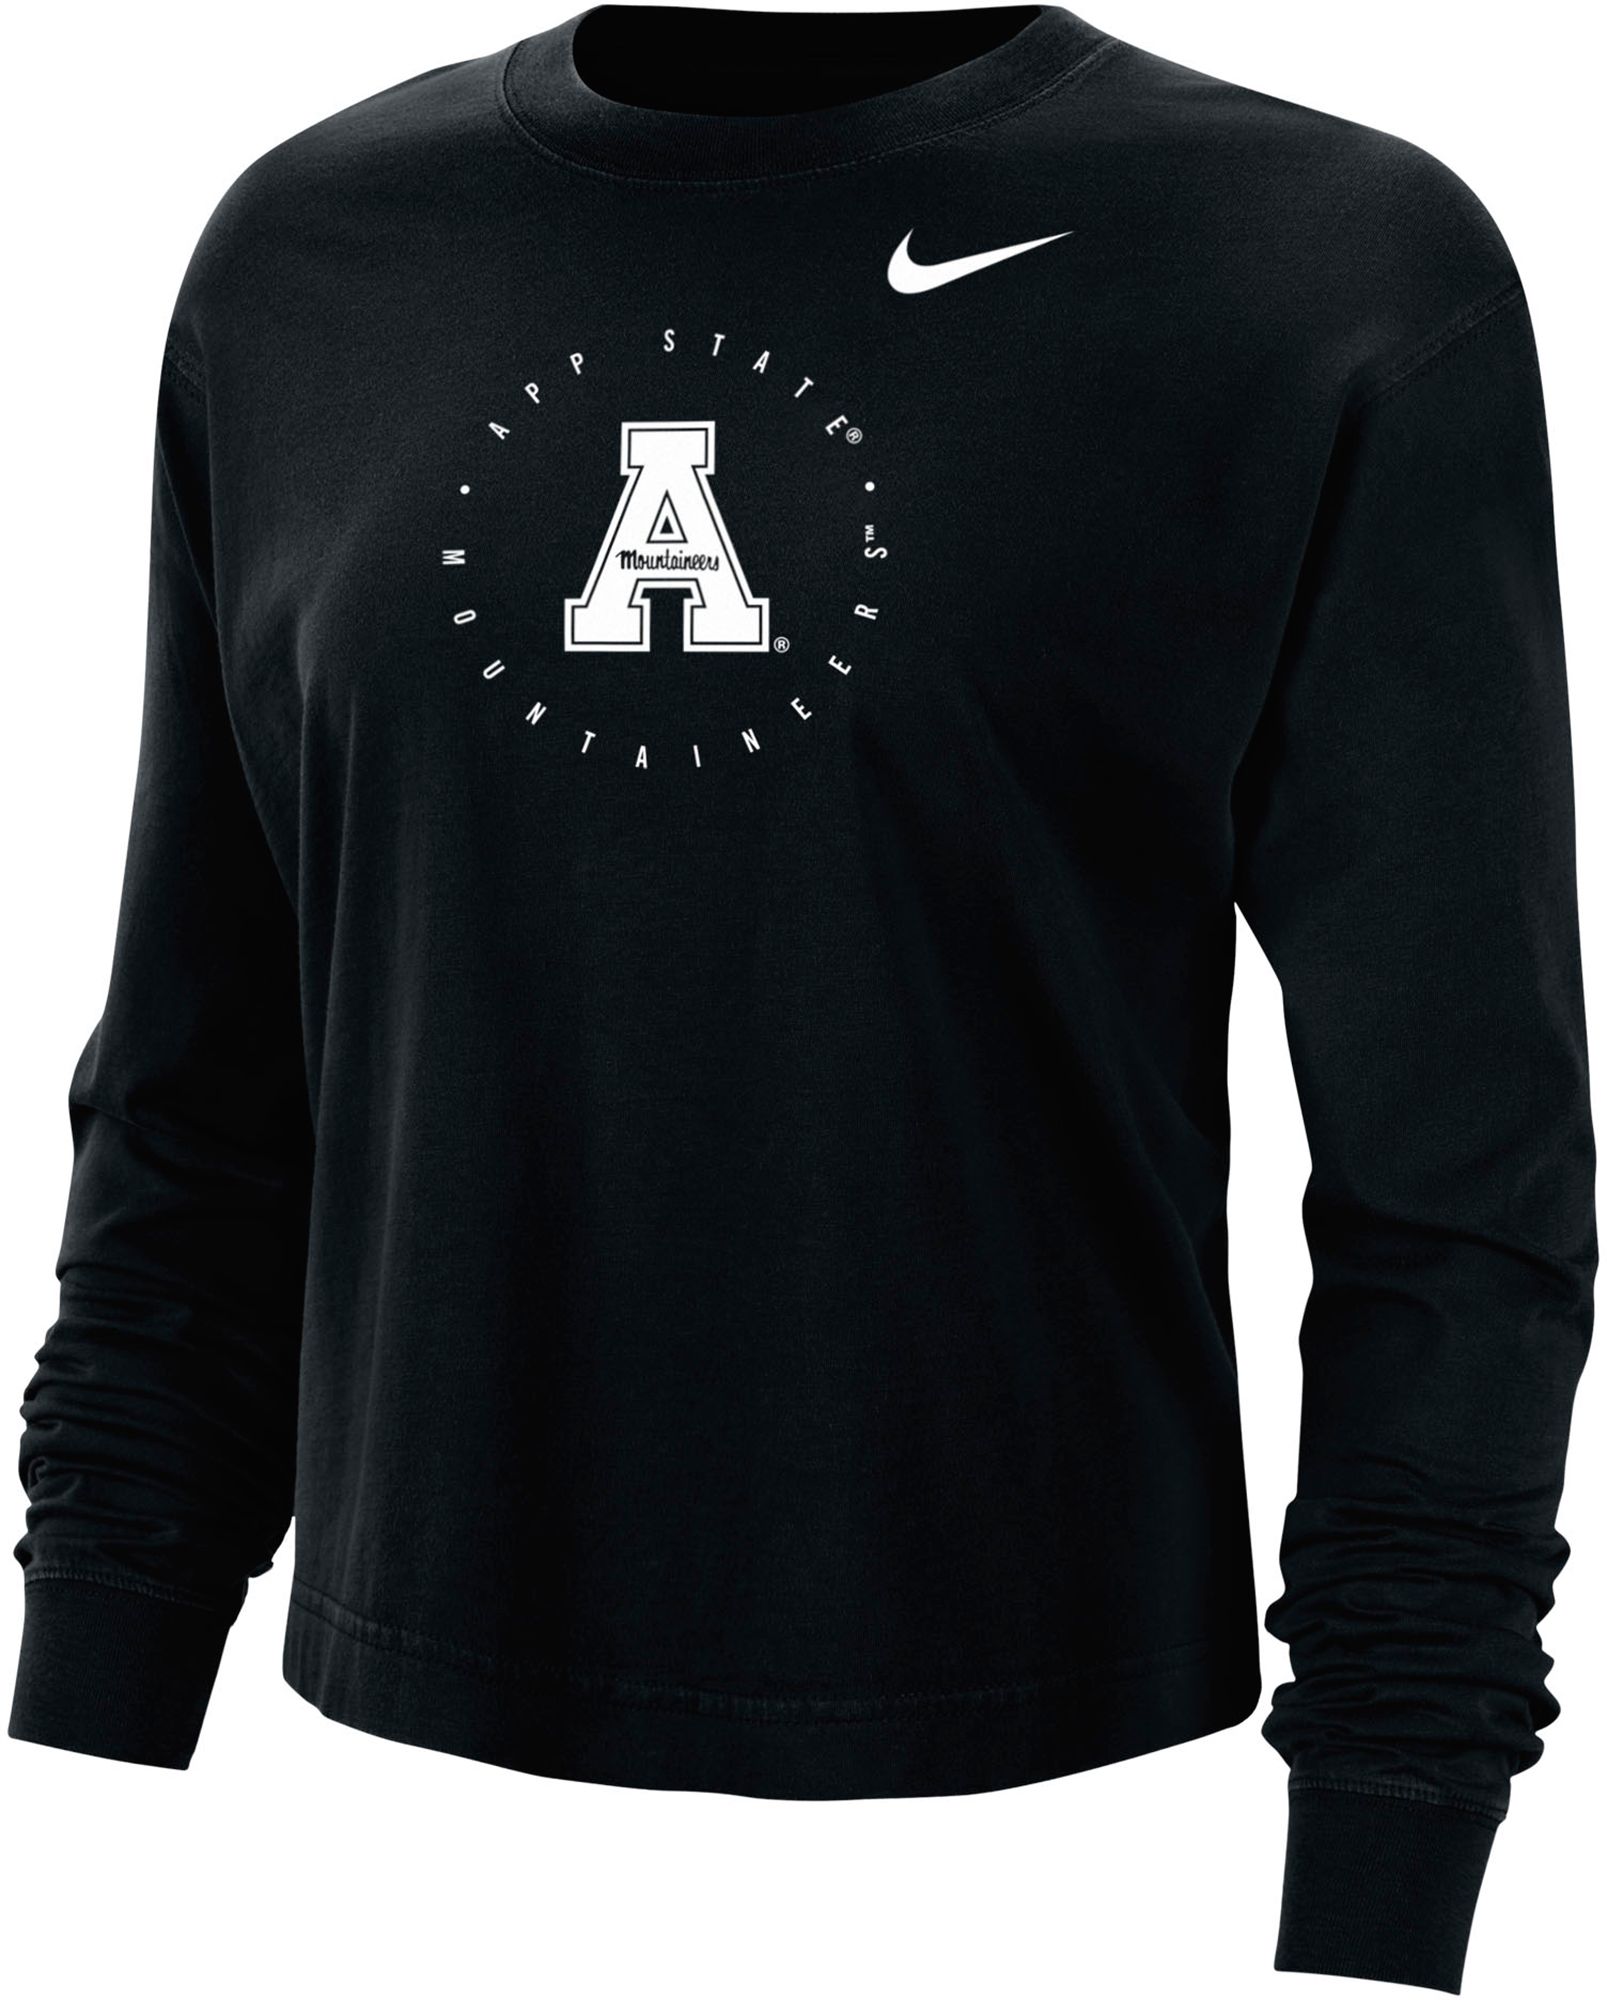 Nike Women's Appalachian State Mountaineers Black Boxy Cropped Long Sleeve T-Shirt